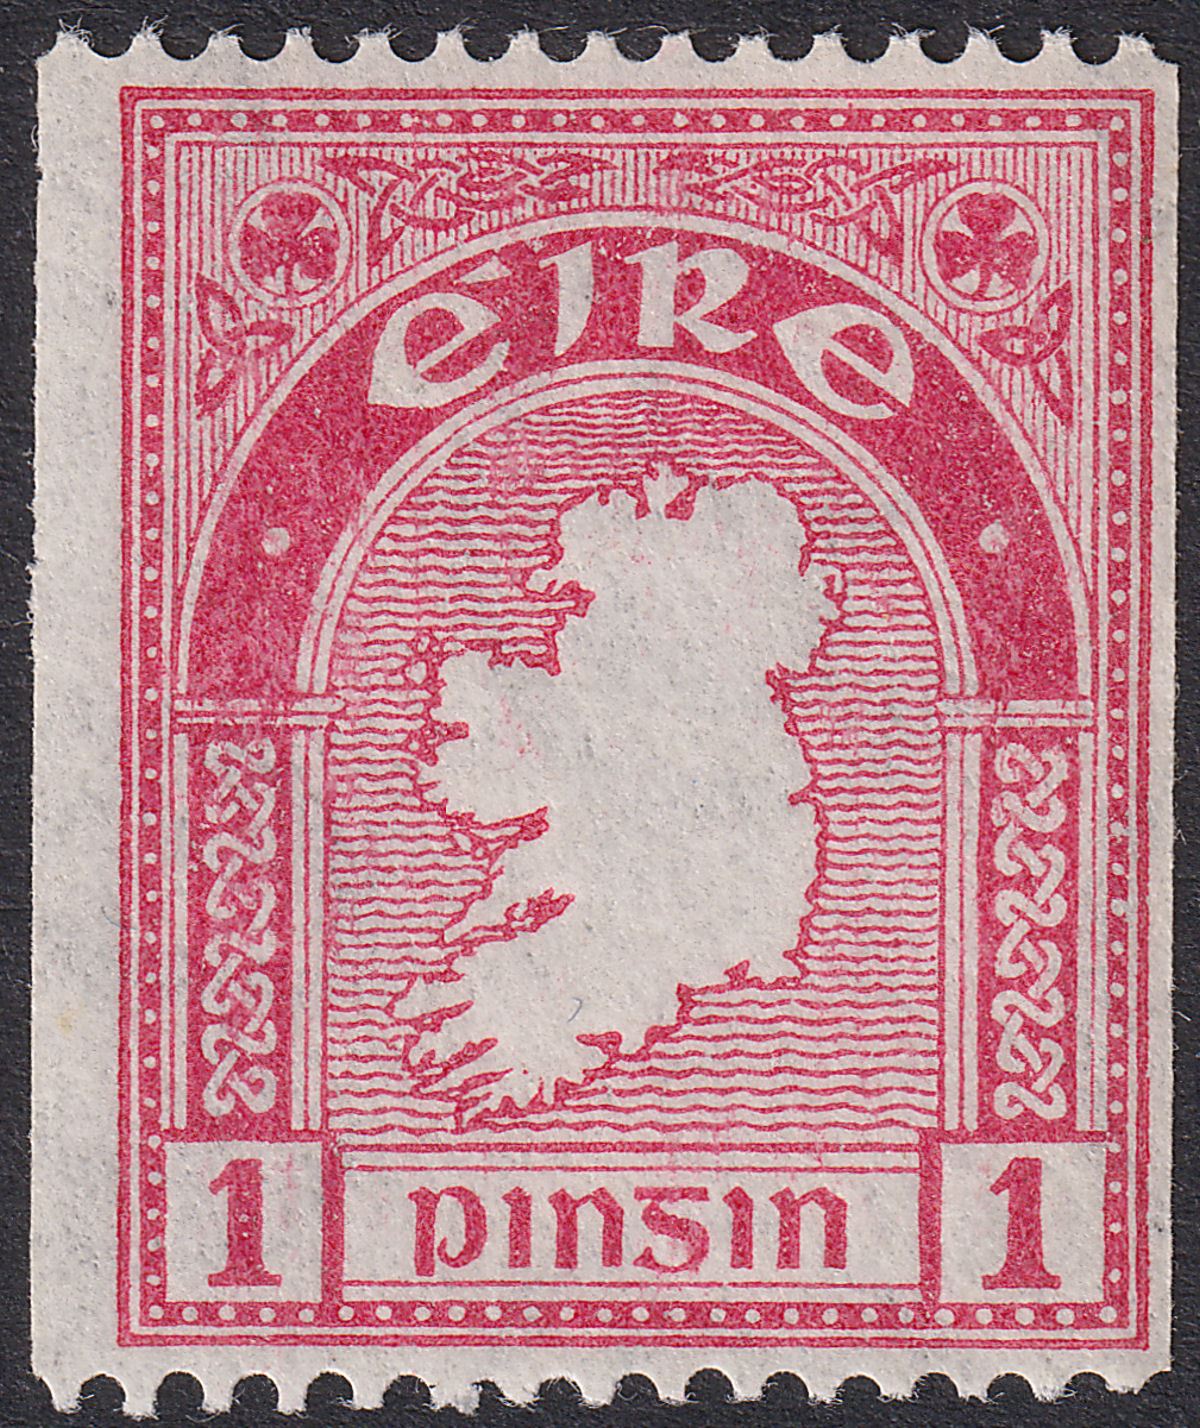 Ireland 1934 1d Carmine Perf 15 x Imperf UM Mint SG72c cat £30 MNH